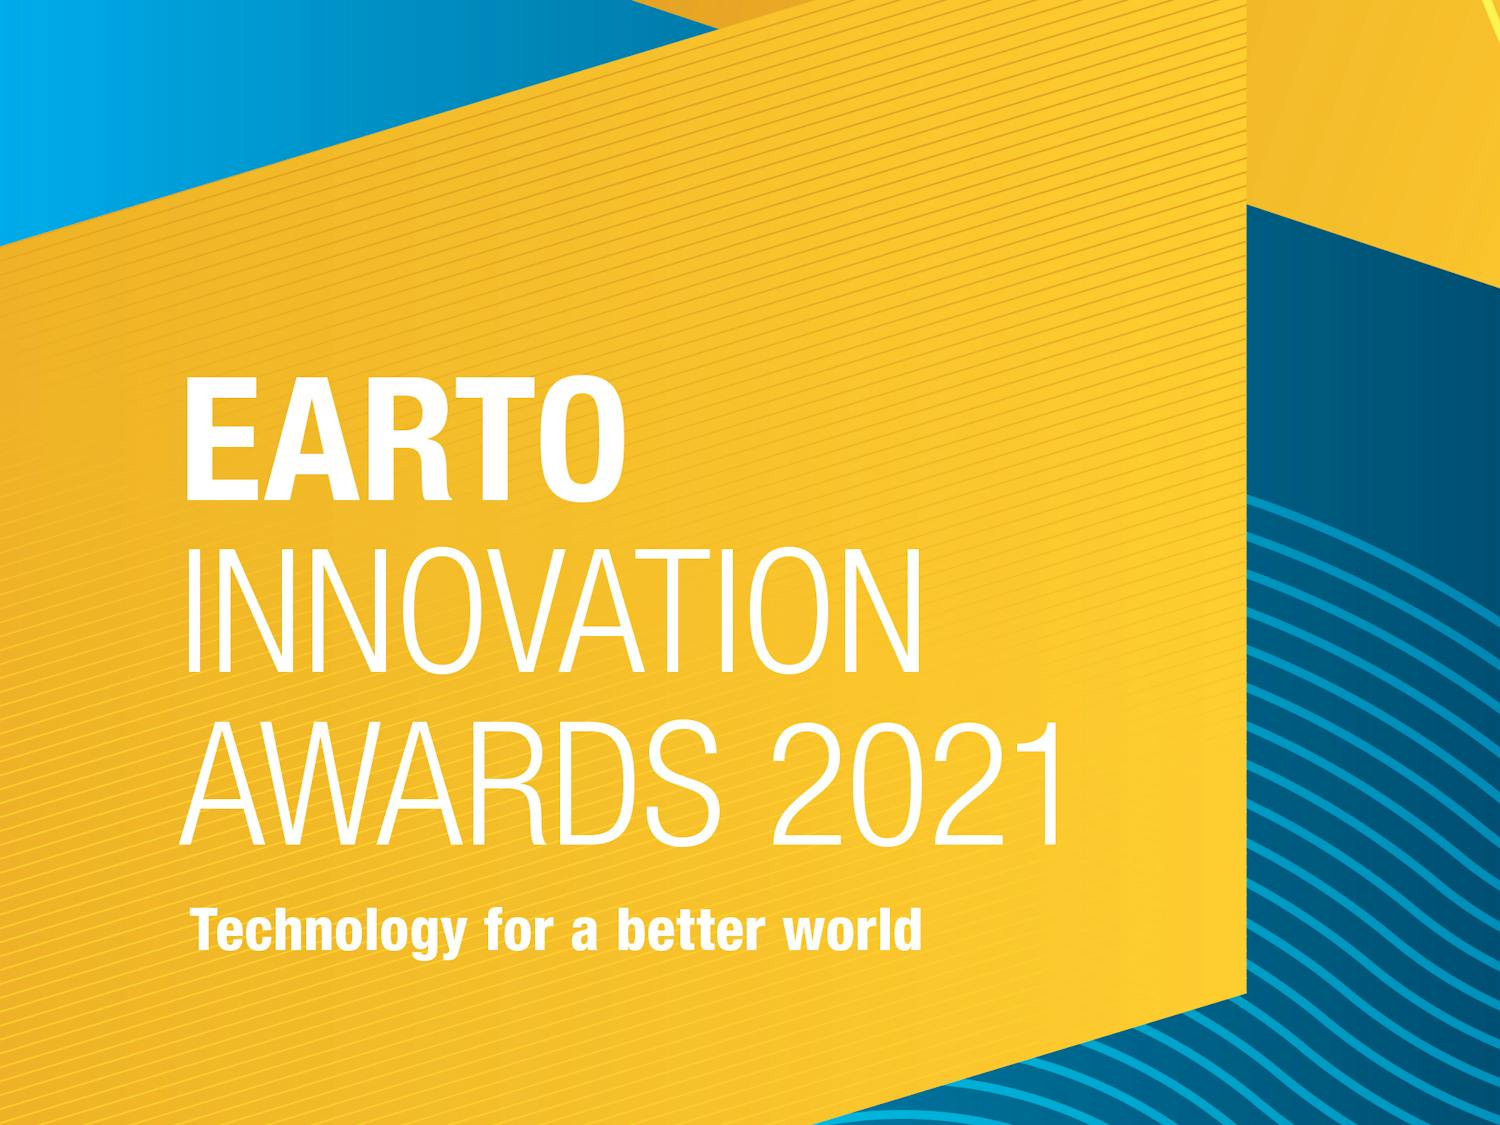 EARTO innovation awards 2021 